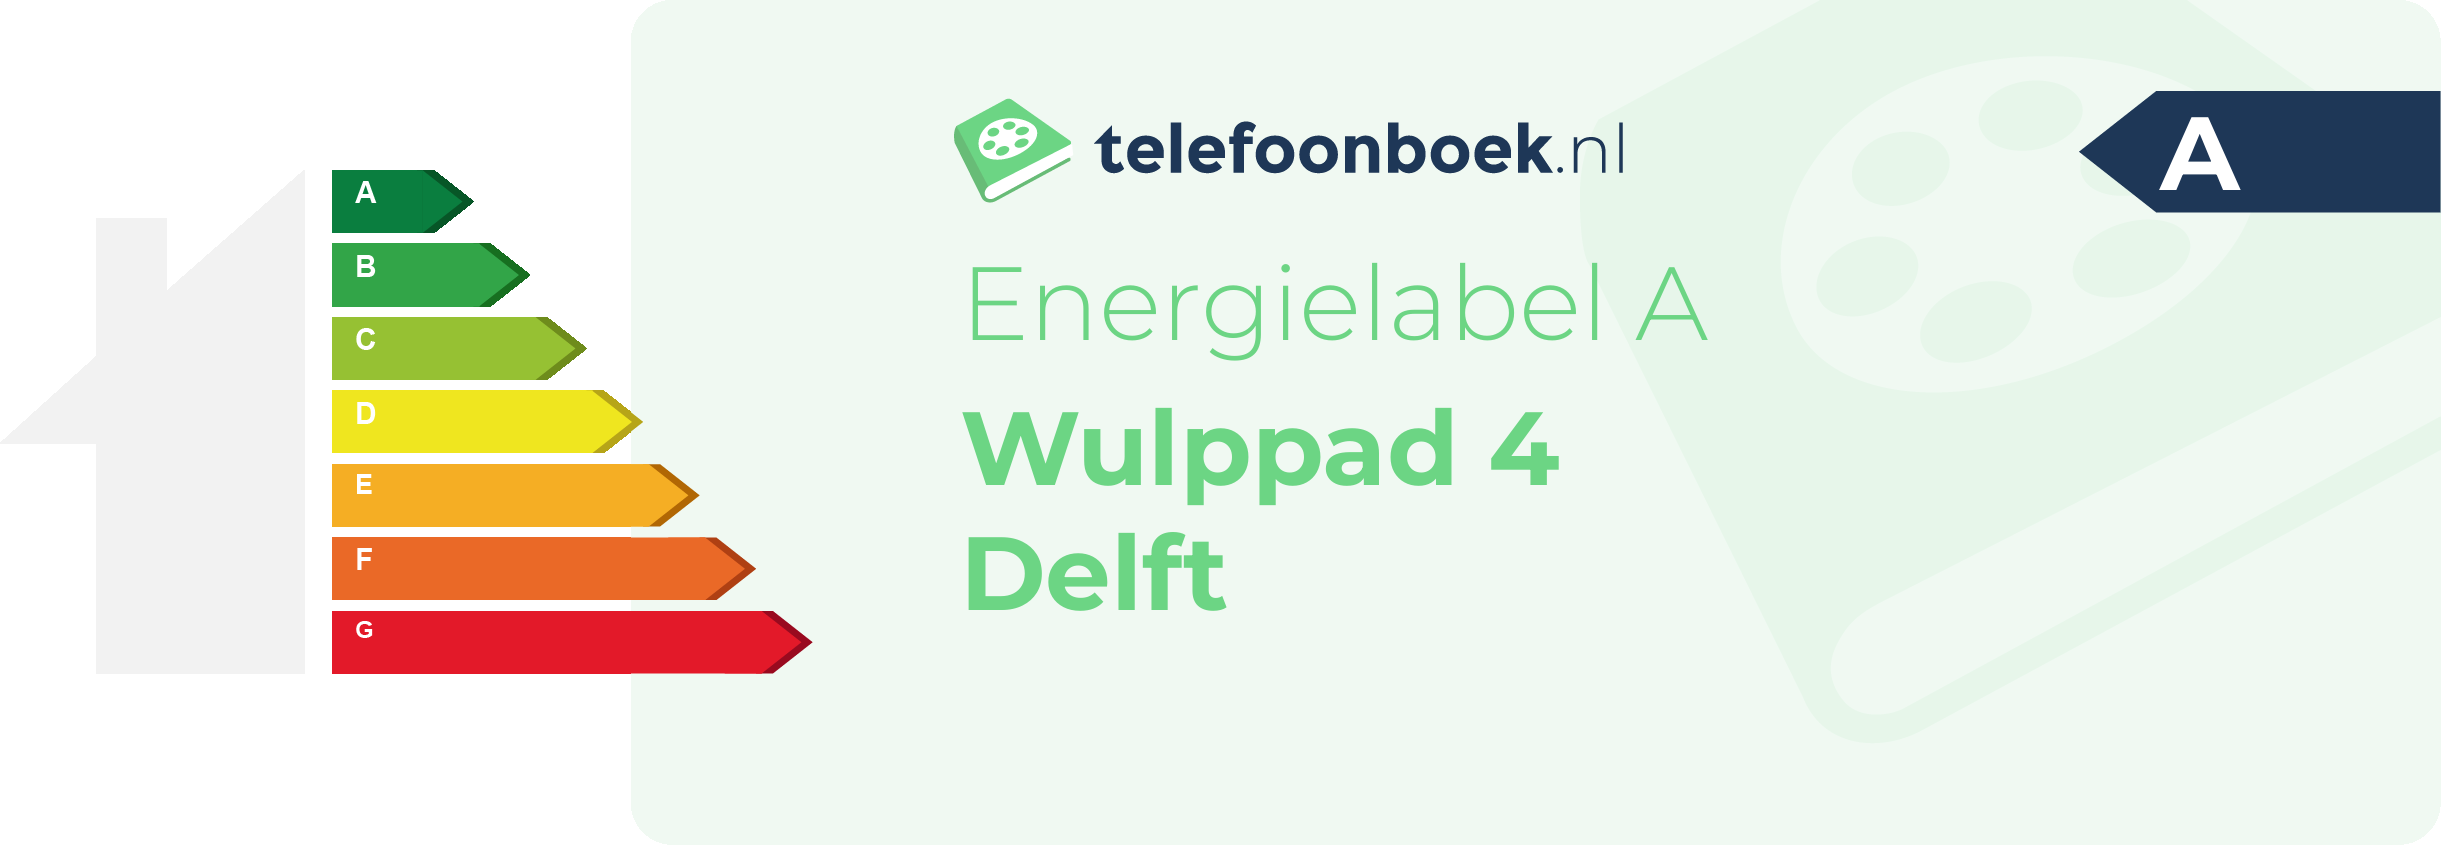 Energielabel Wulppad 4 Delft